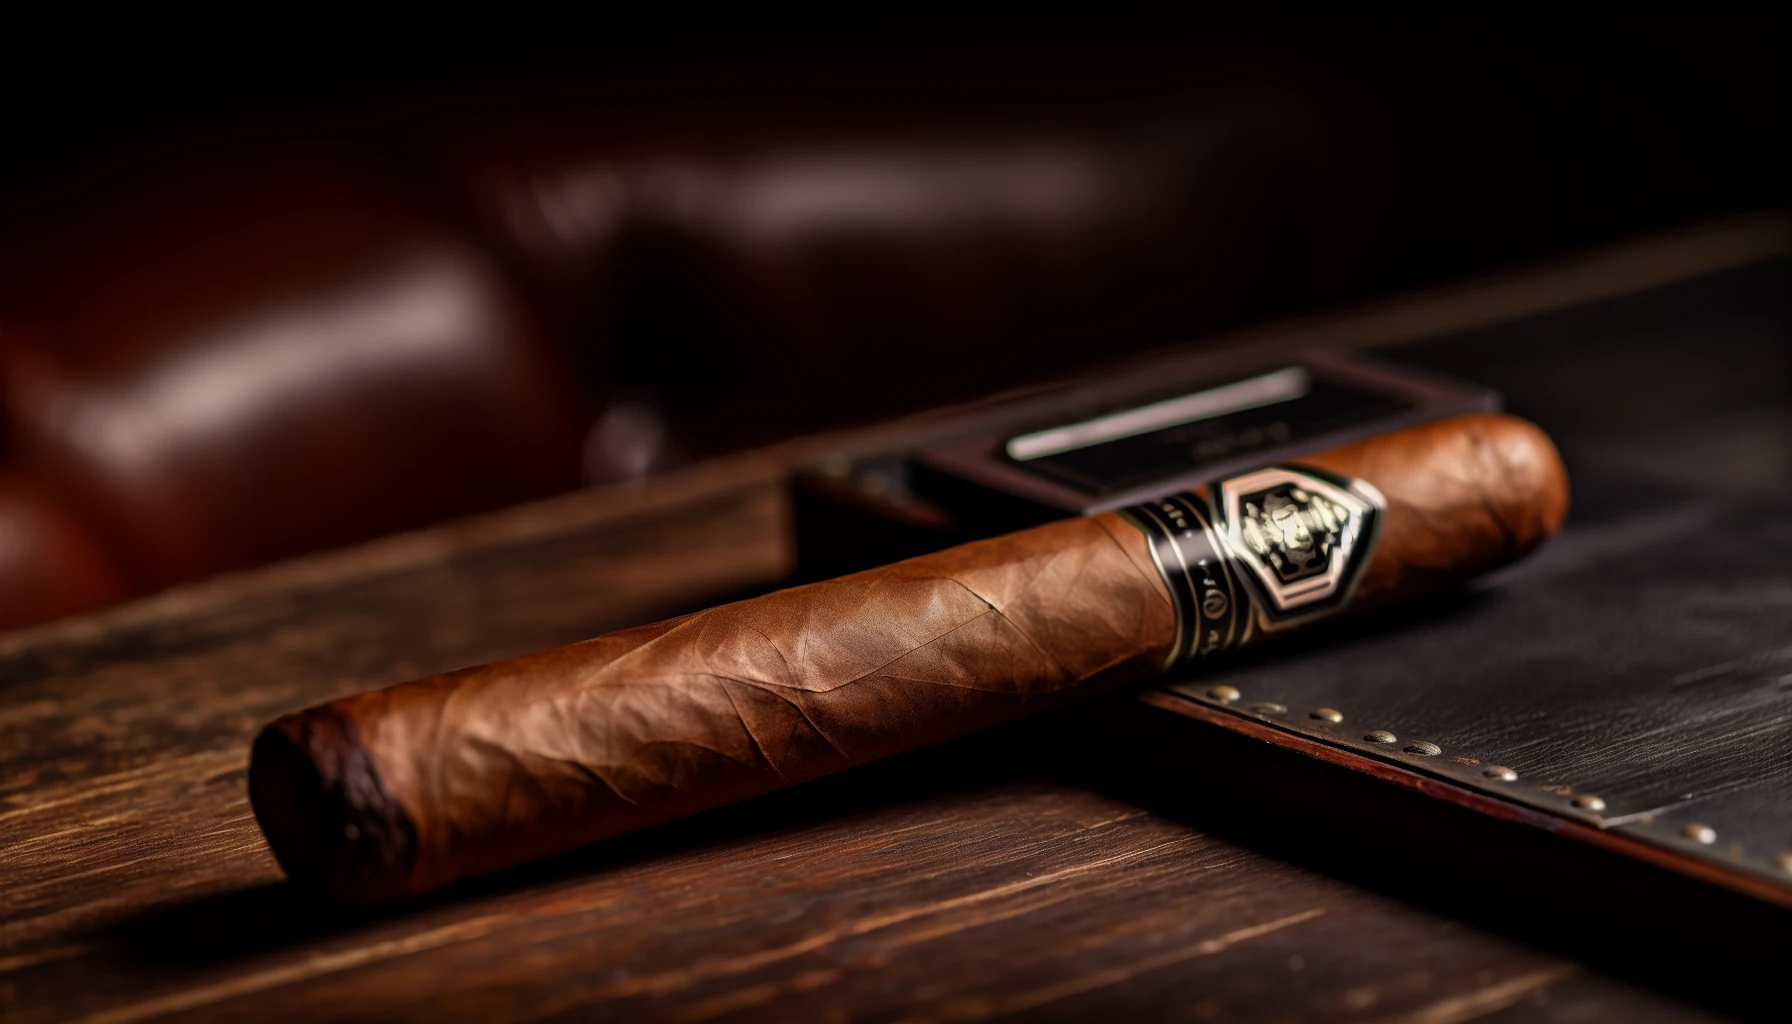 A.J. Fernandez New World Gobernador Toro cigar resting on a dark wooden table